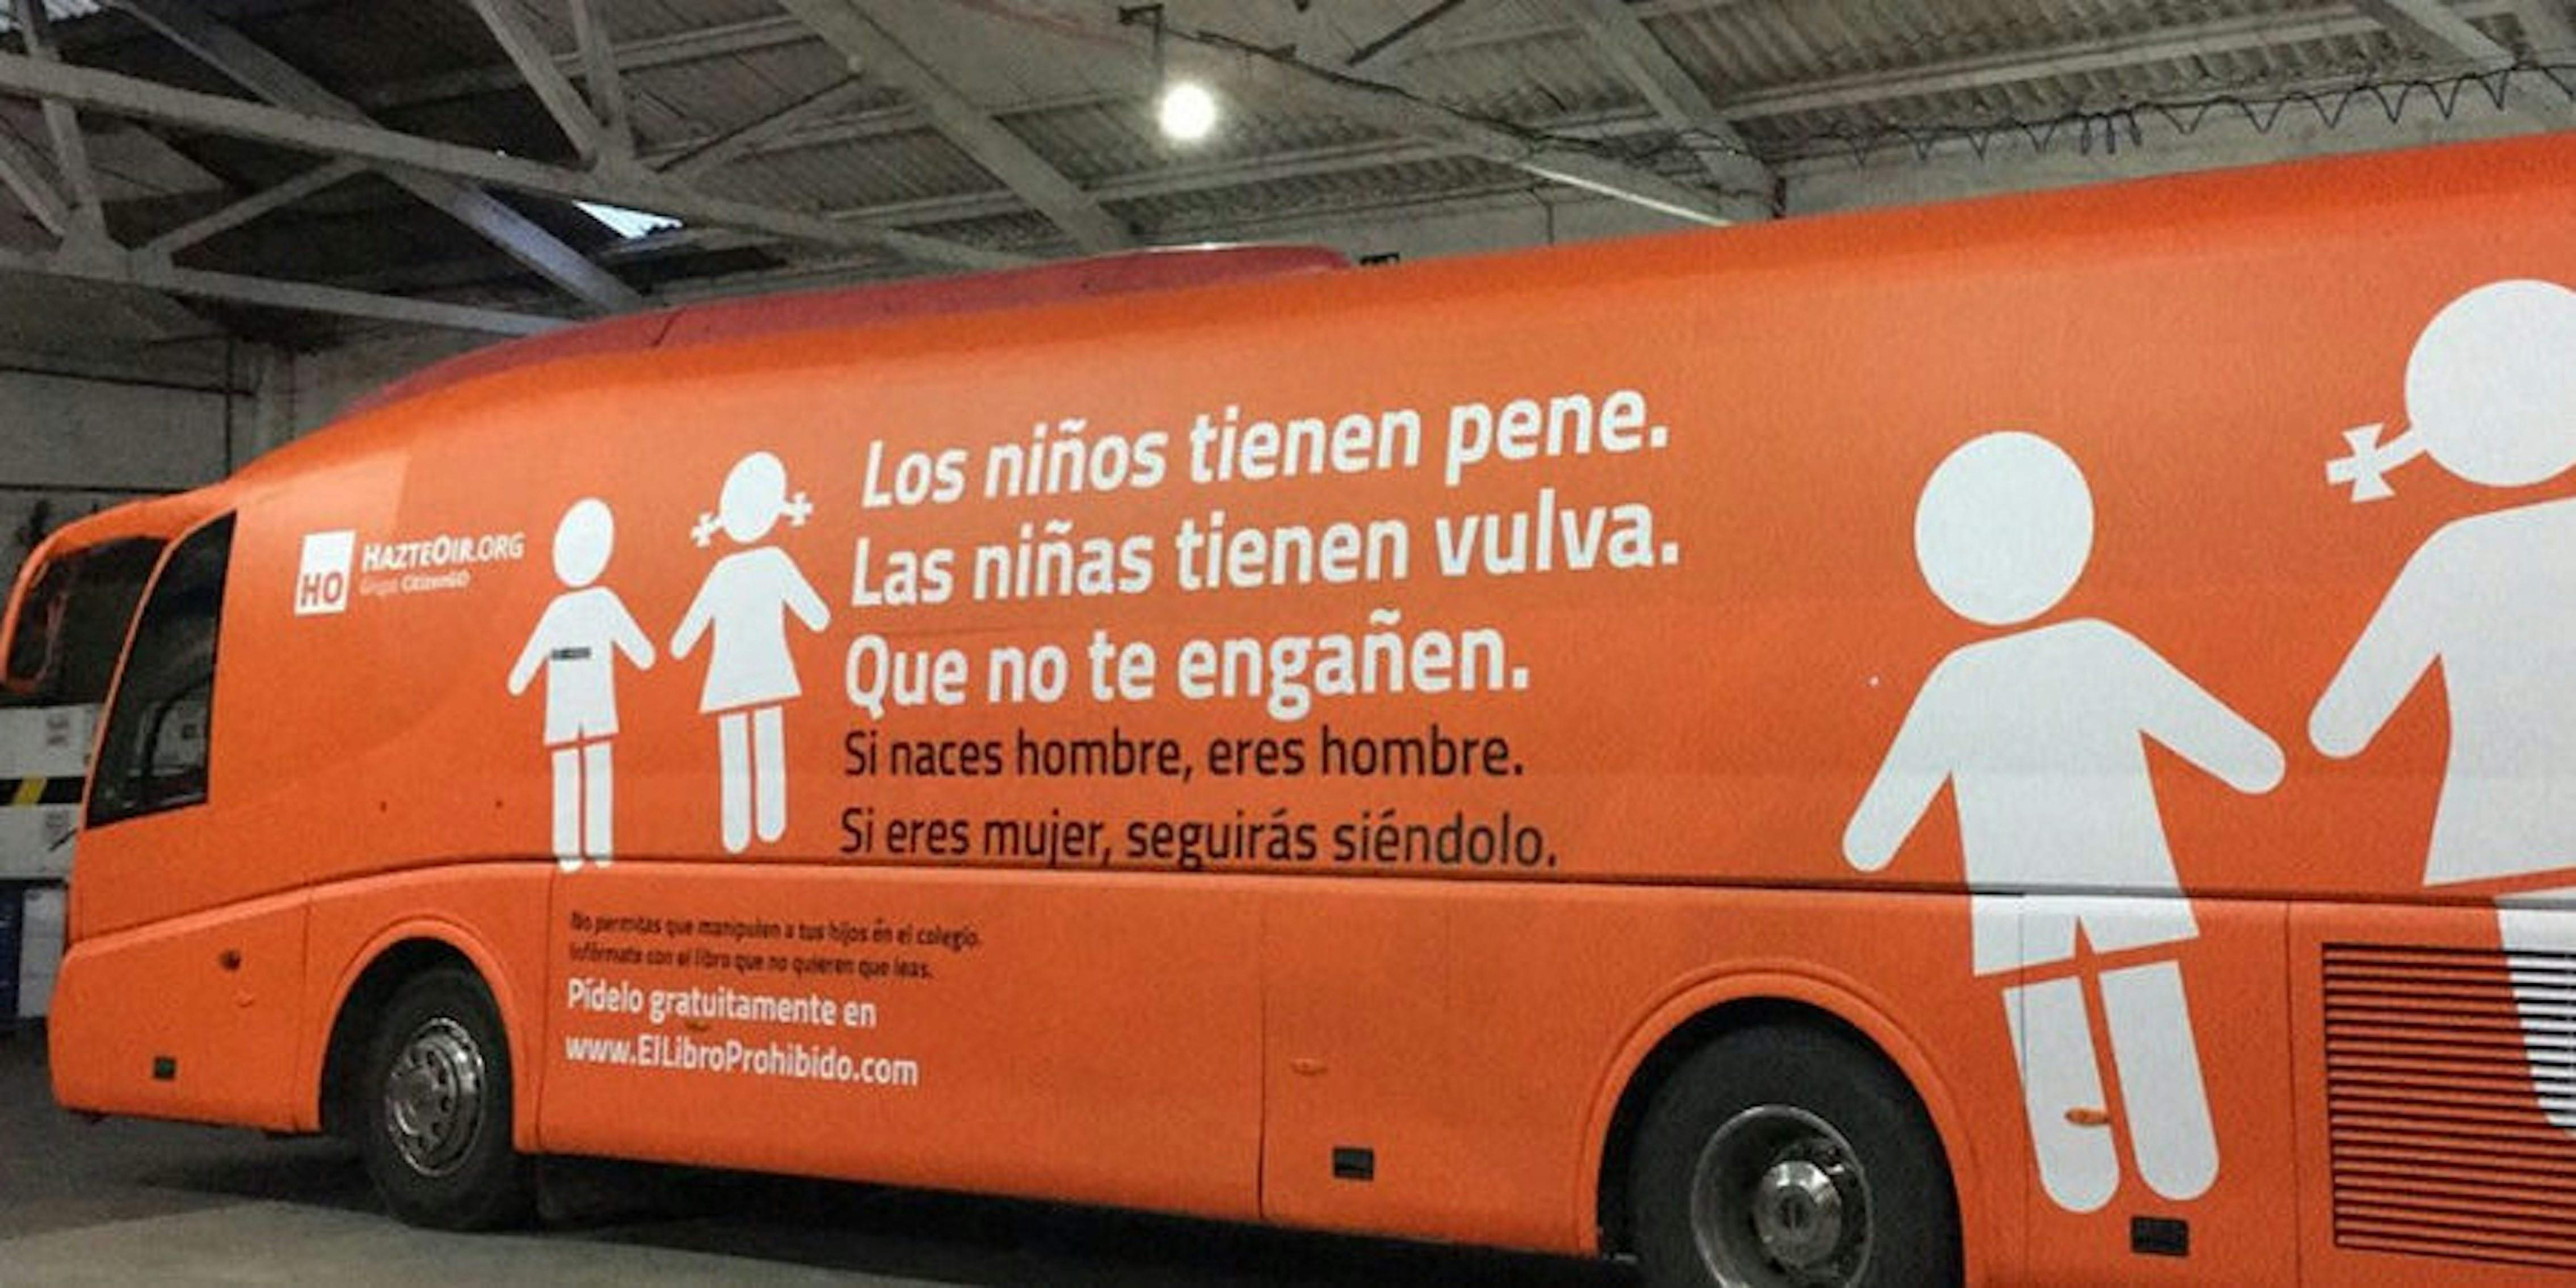 anti-transgender campaign bus Madrid